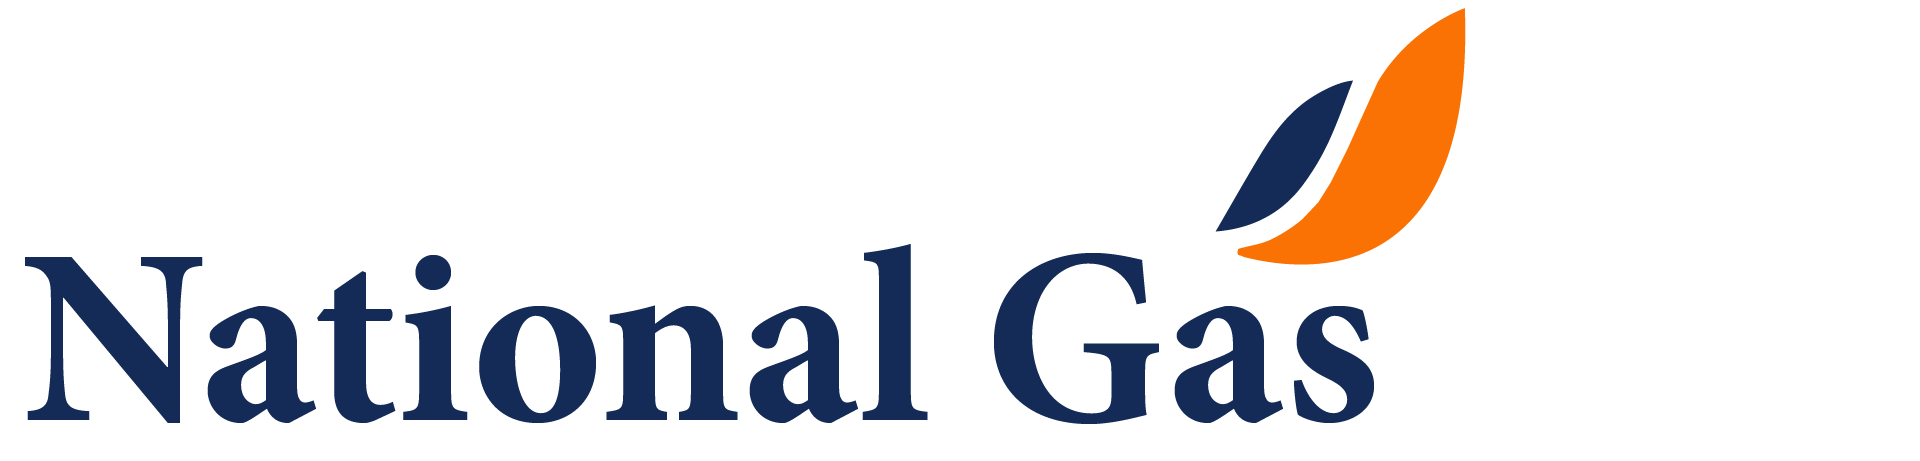 Gas Logo - National Gas